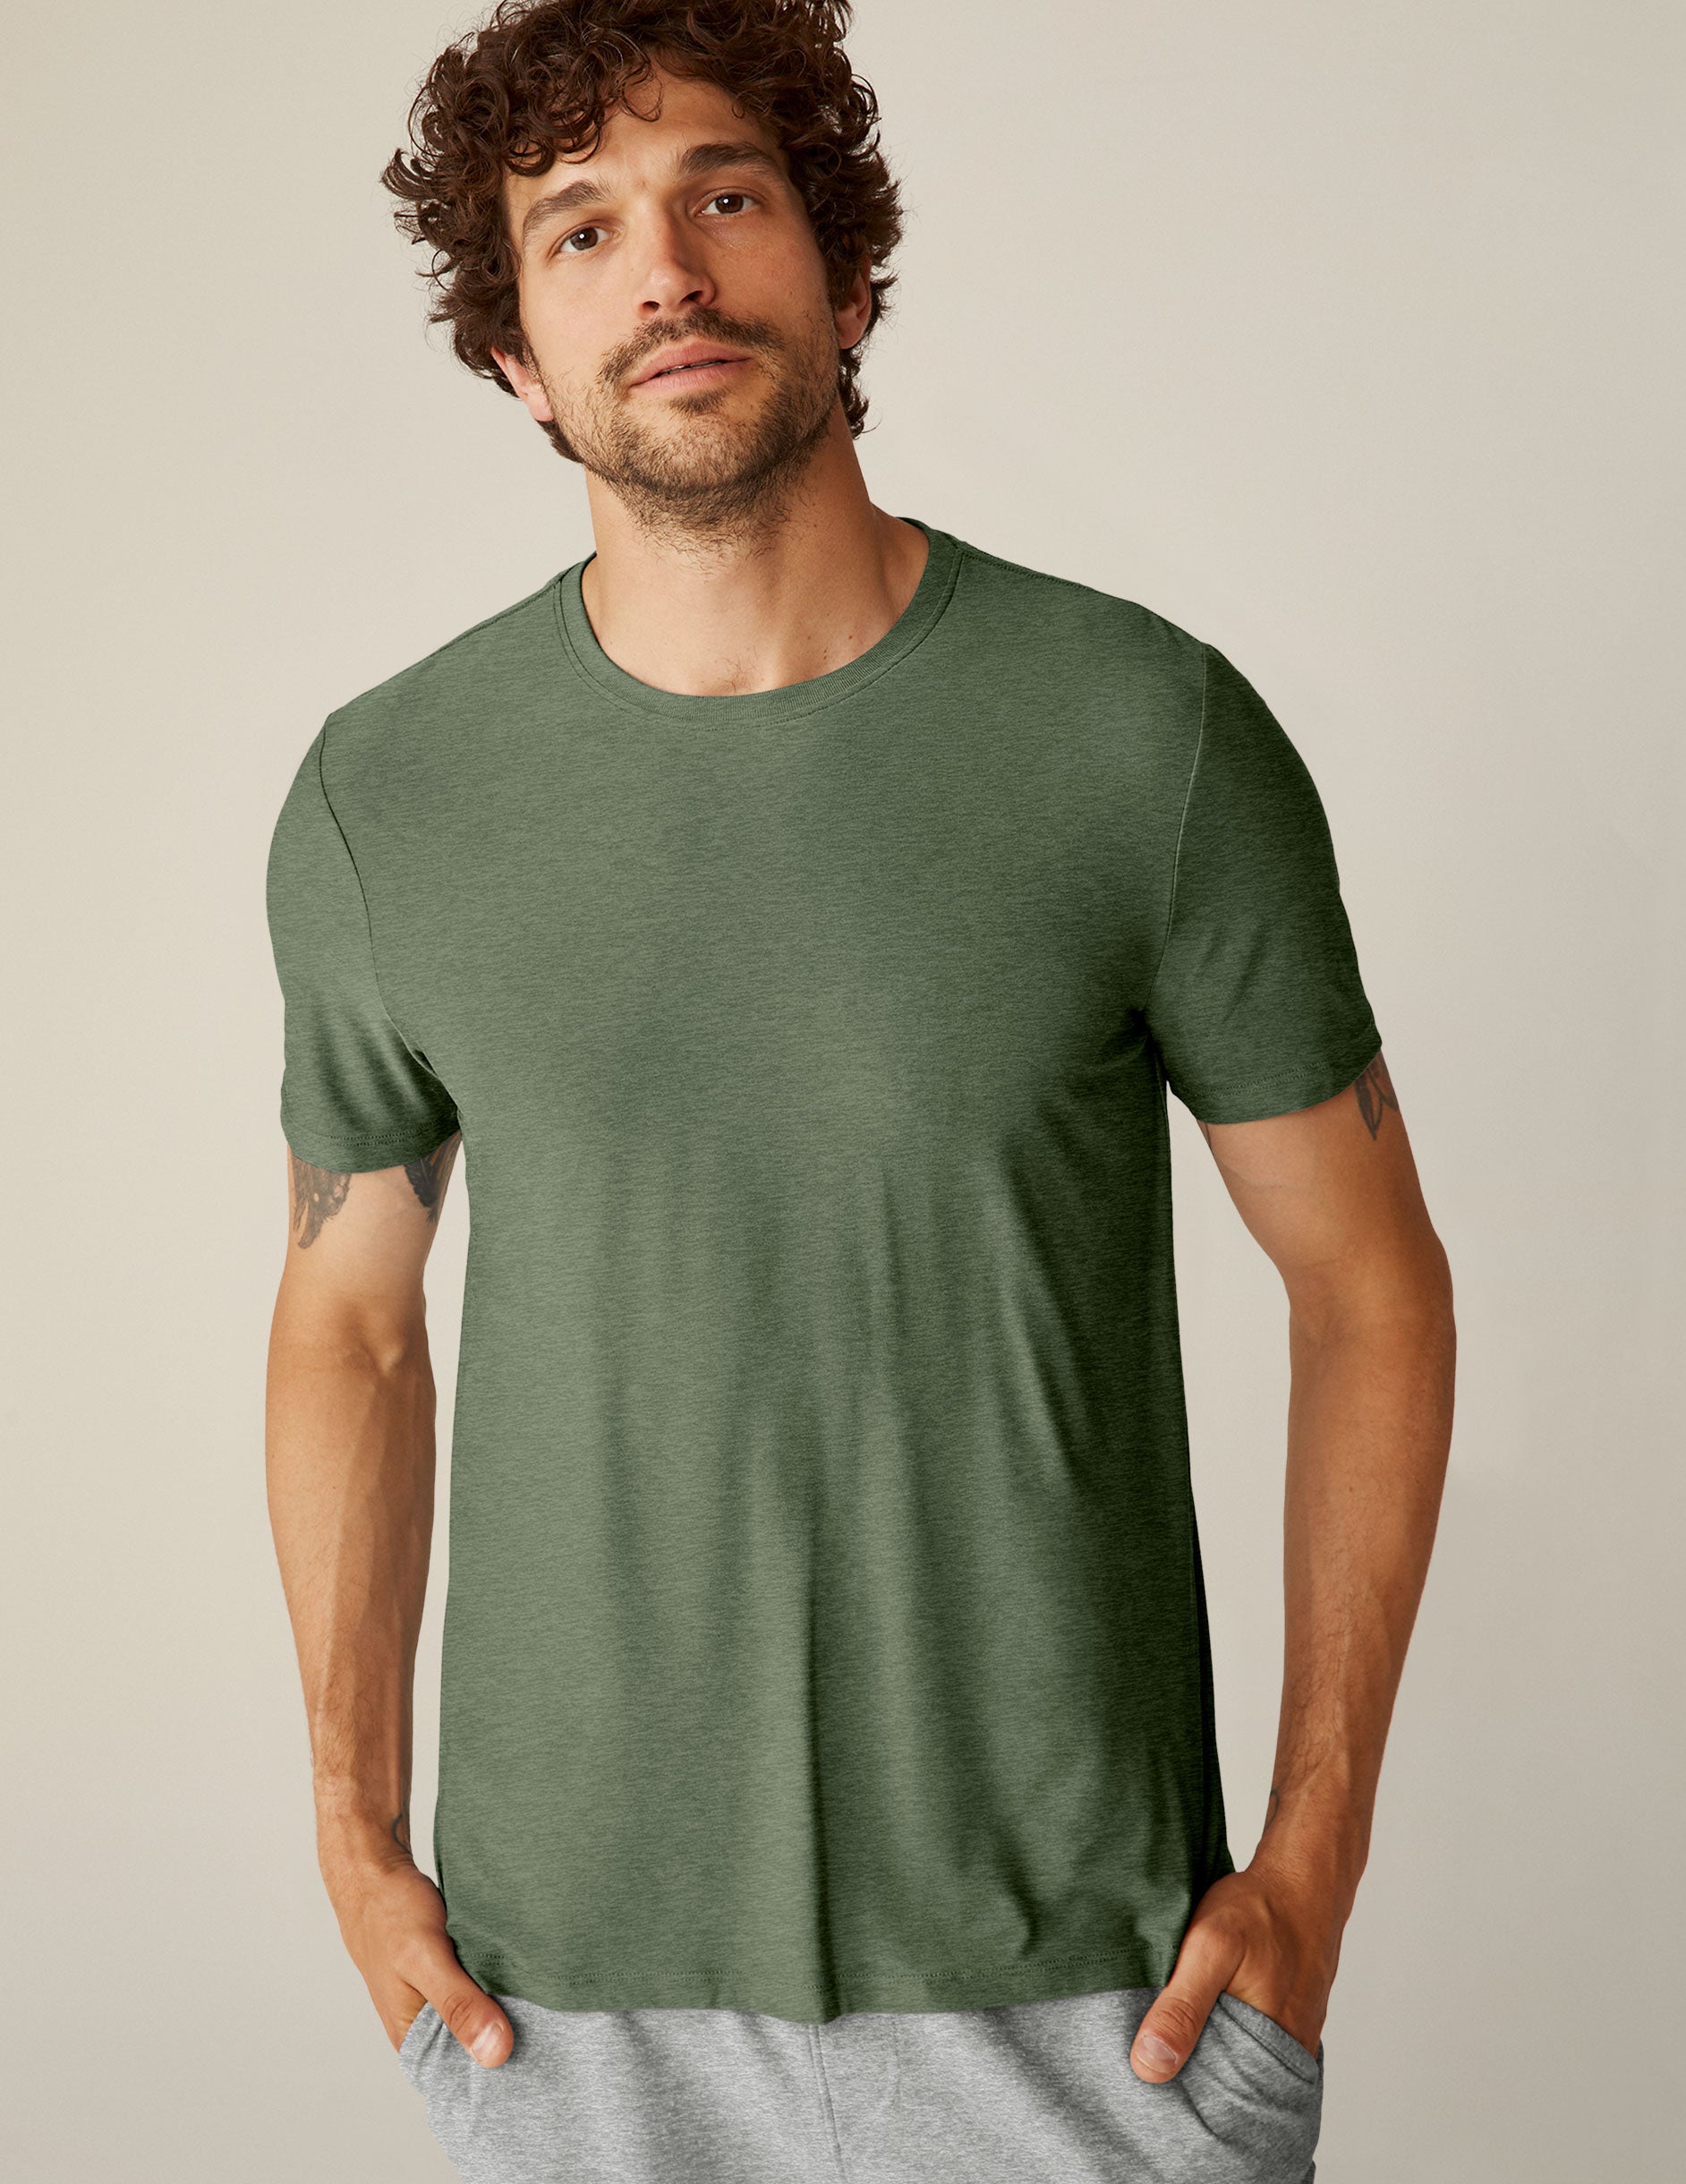 green mens short sleeve shirt. 